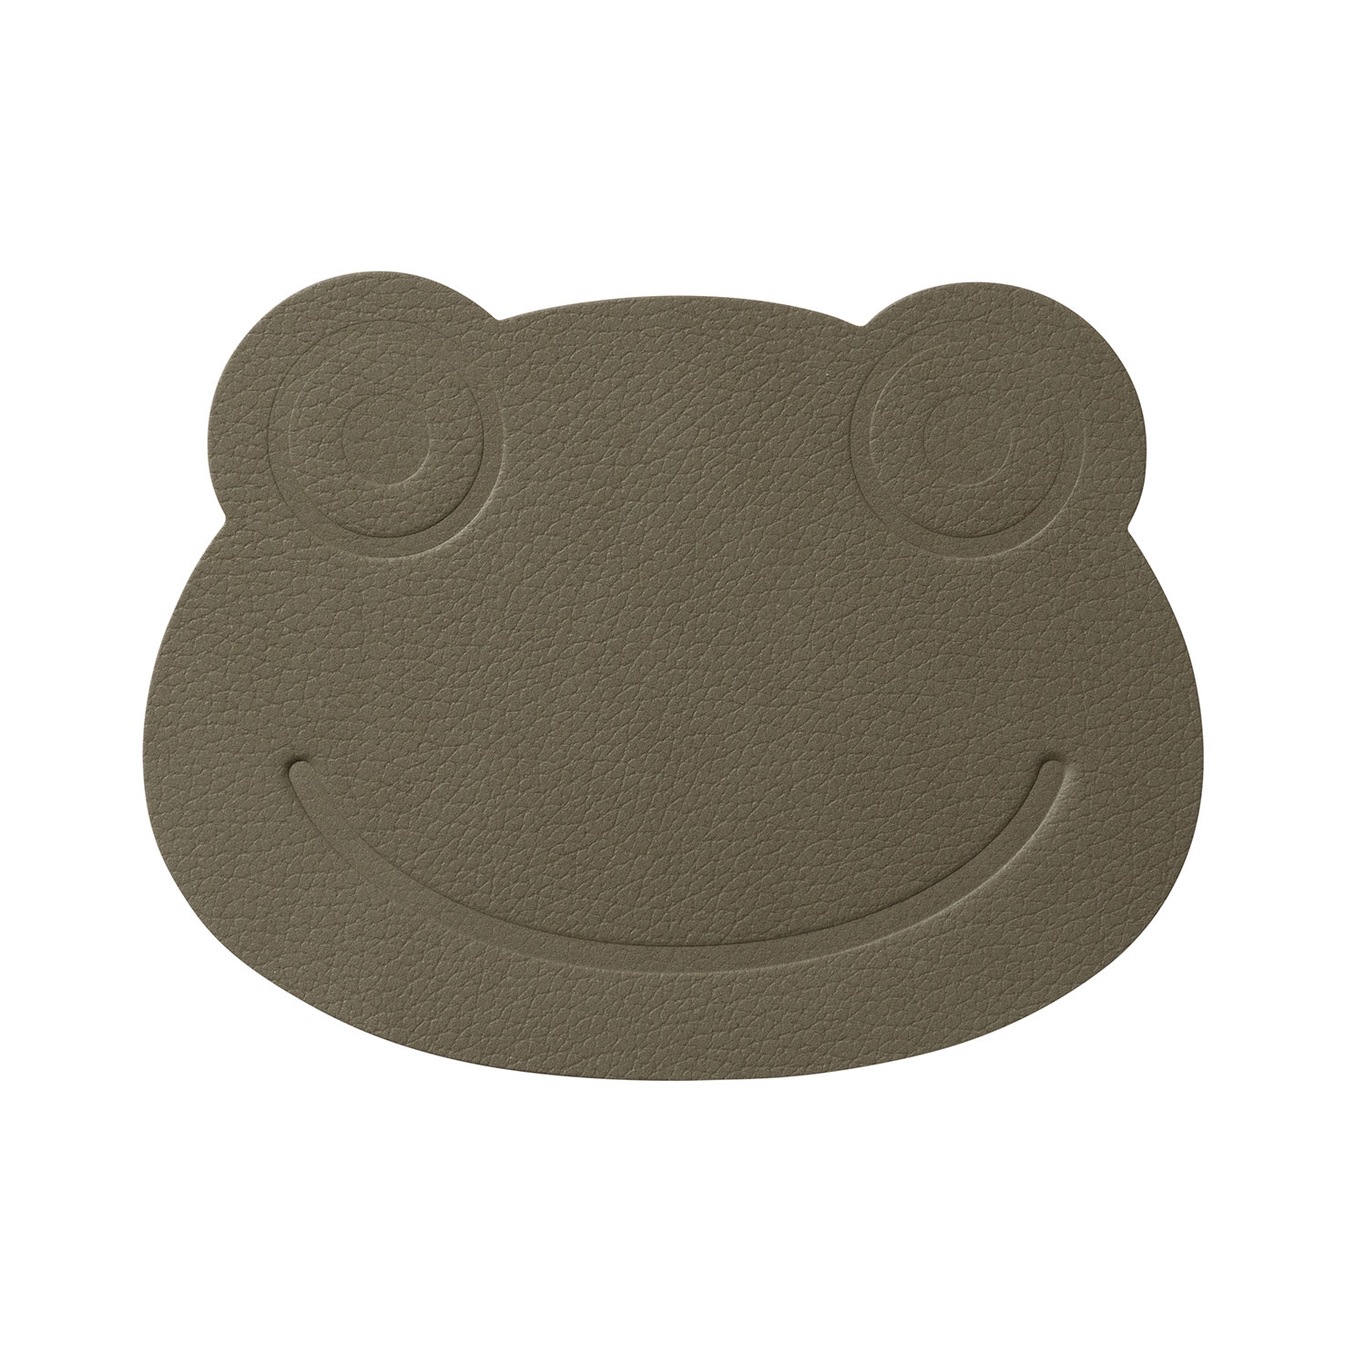 Frog Coaster, Nupo Army Green